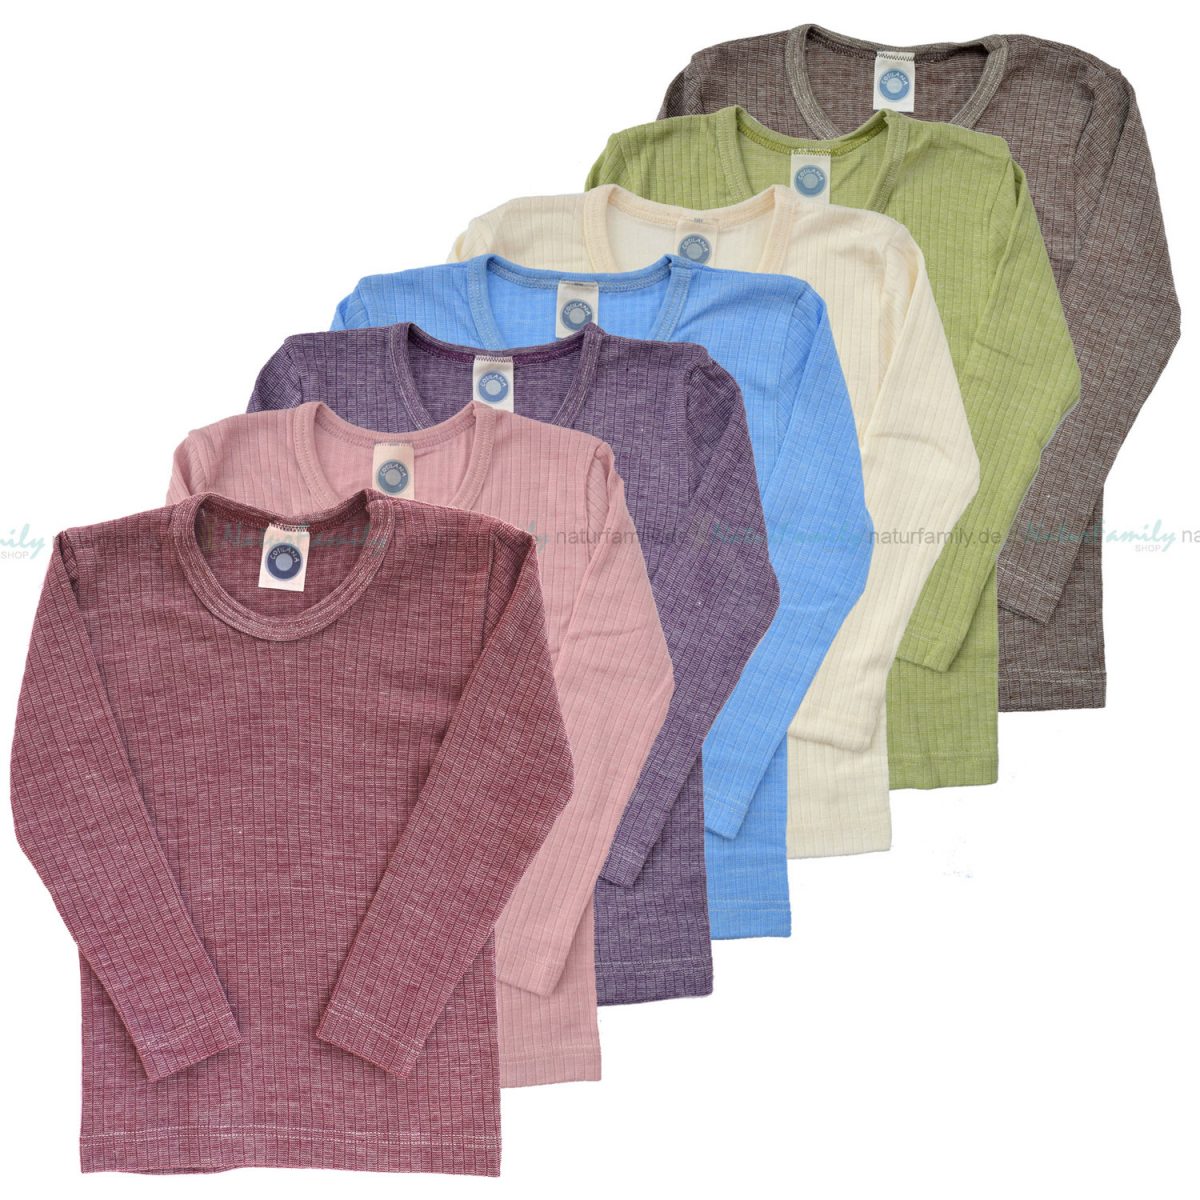 Cosilana Kinder Unterhemd langarm, Wolle Seide Baumwolle kbA kbT, Shirt Gr. 92-152